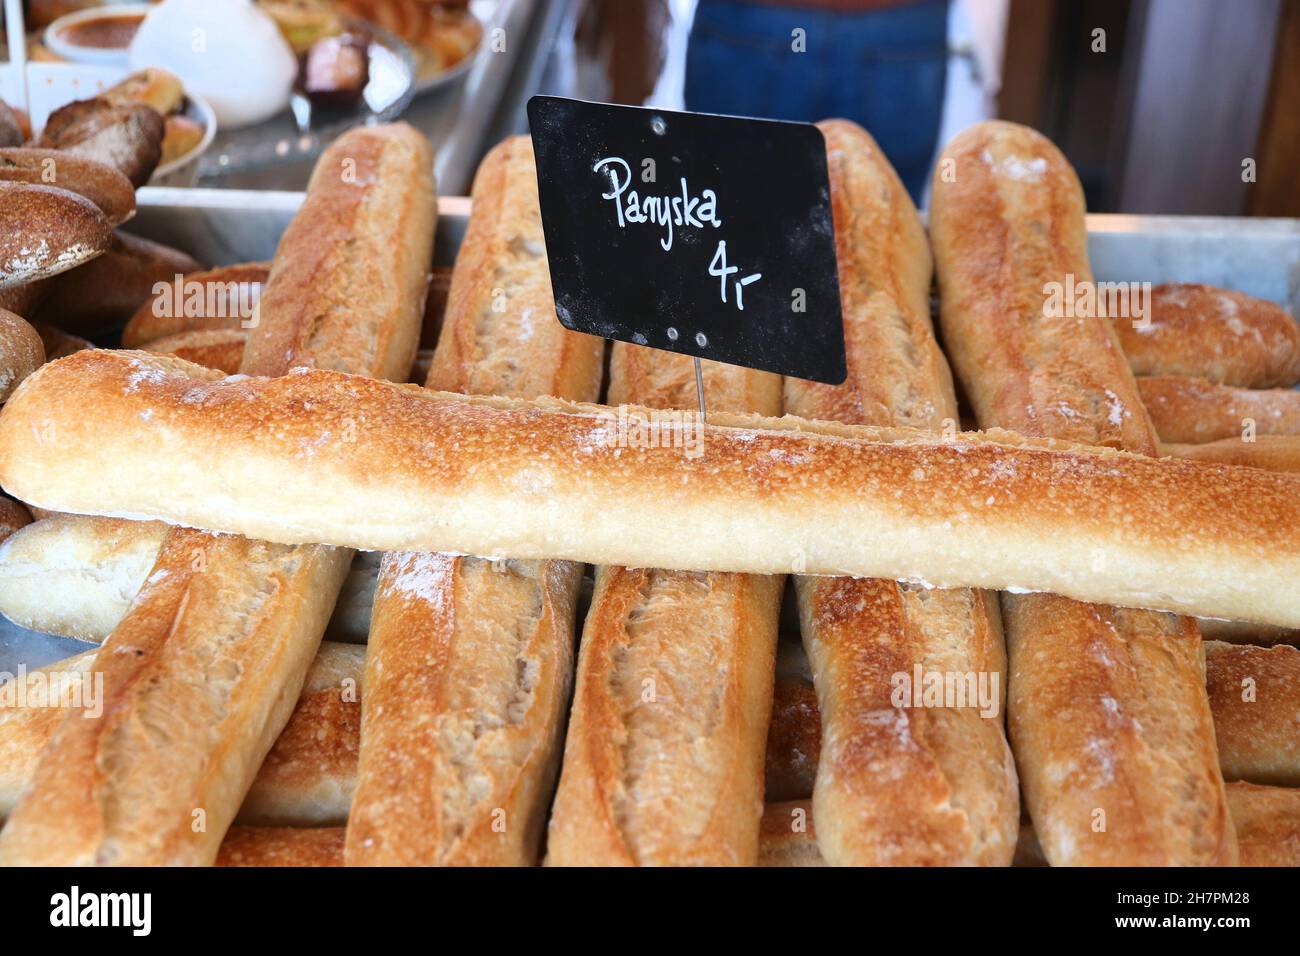 Artisanal bakery products in Poland. Parisian baguette (Paryska on tag means Parisian in Polish language). Stock Photo